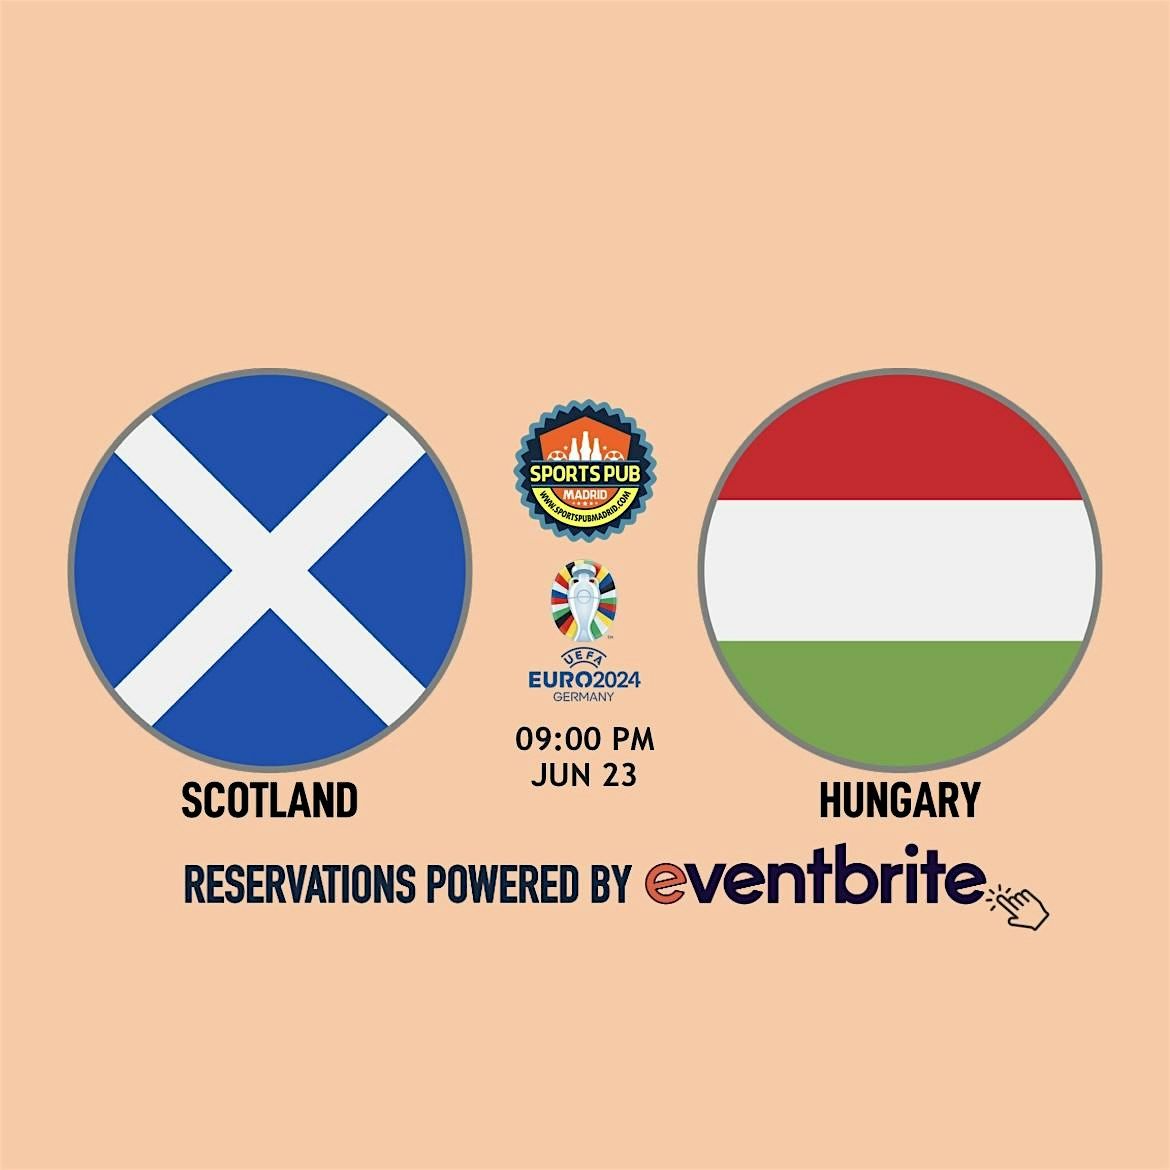 Escocia v Hungria | Eurocopa 2024 - Sports Pub Madrid | Malasa\u00f1a